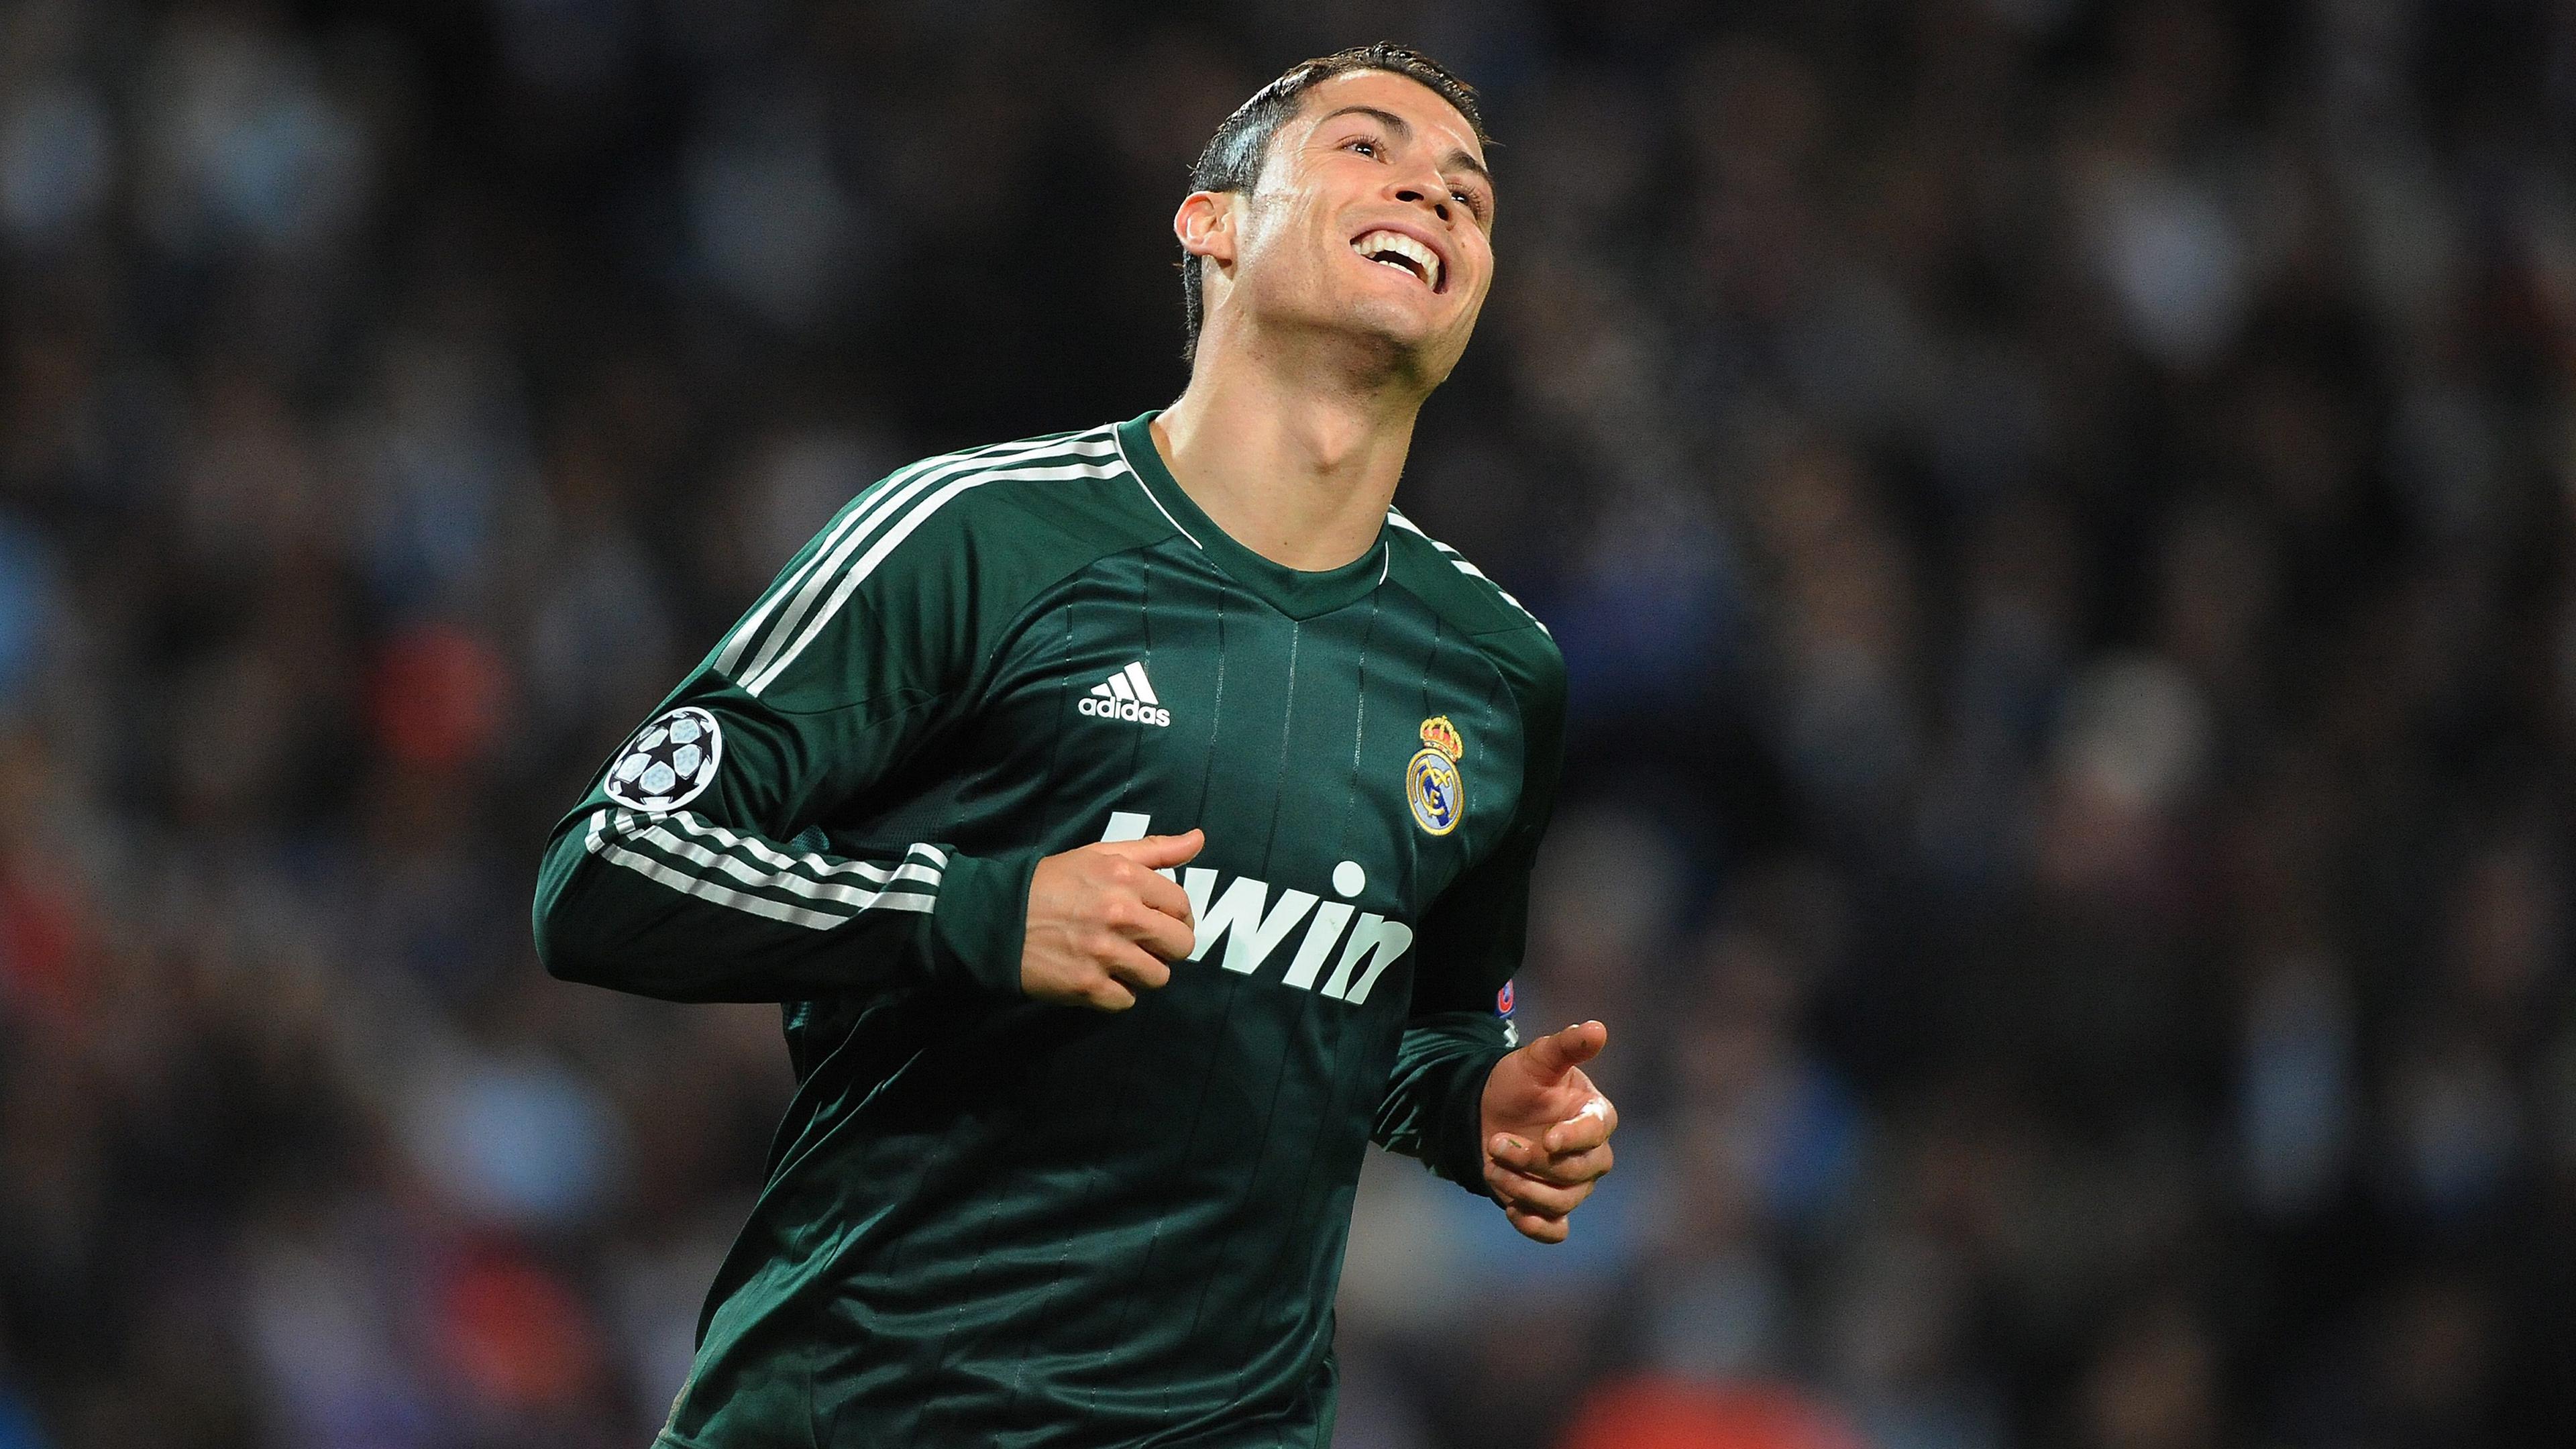 Cristiano Ronaldo conquista primeiro título no mundo árabe e se